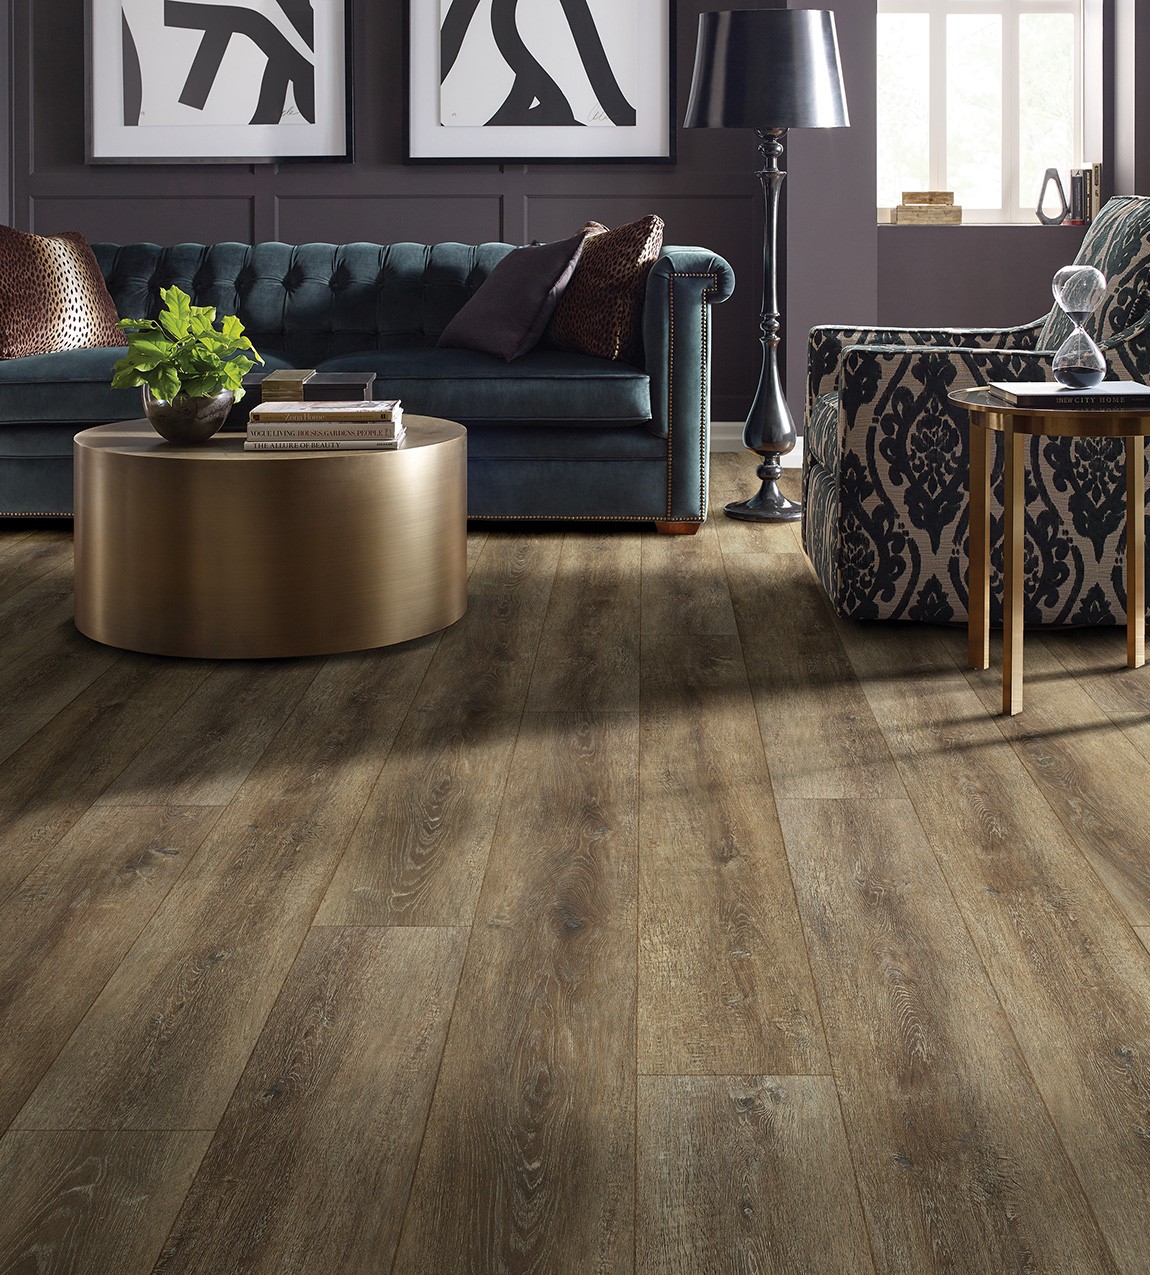 vinyl wood look flooring in classically styled living room